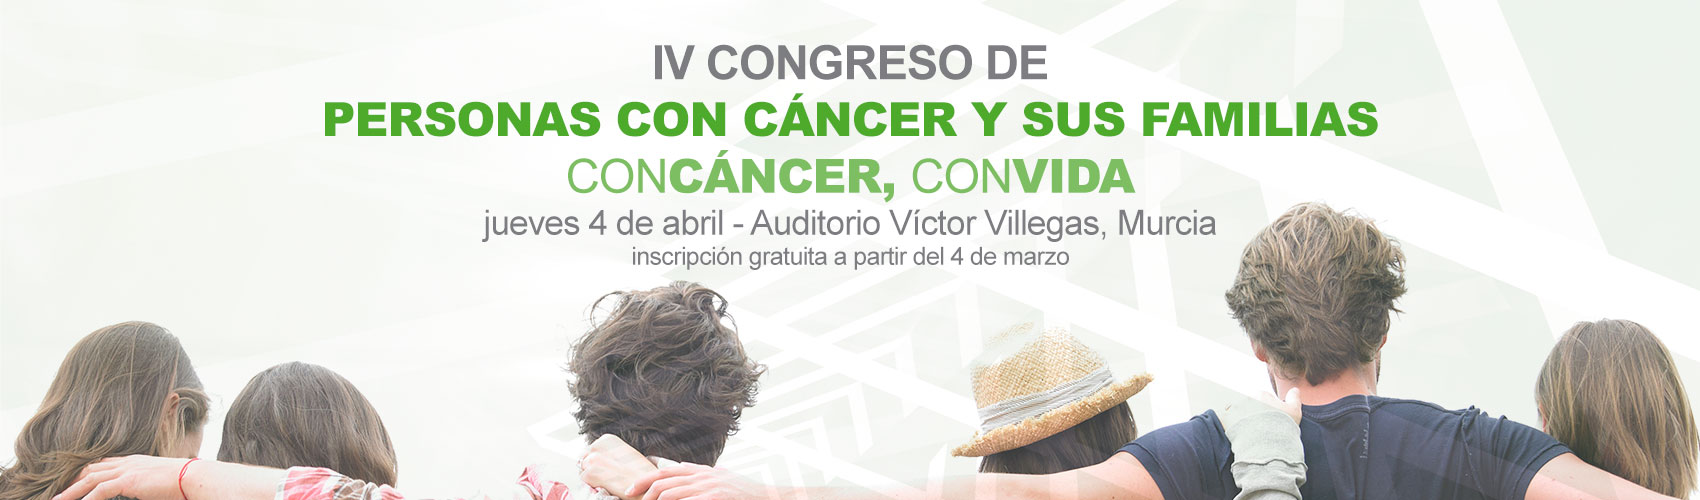 Congreso-Murcia-cancer.jpg